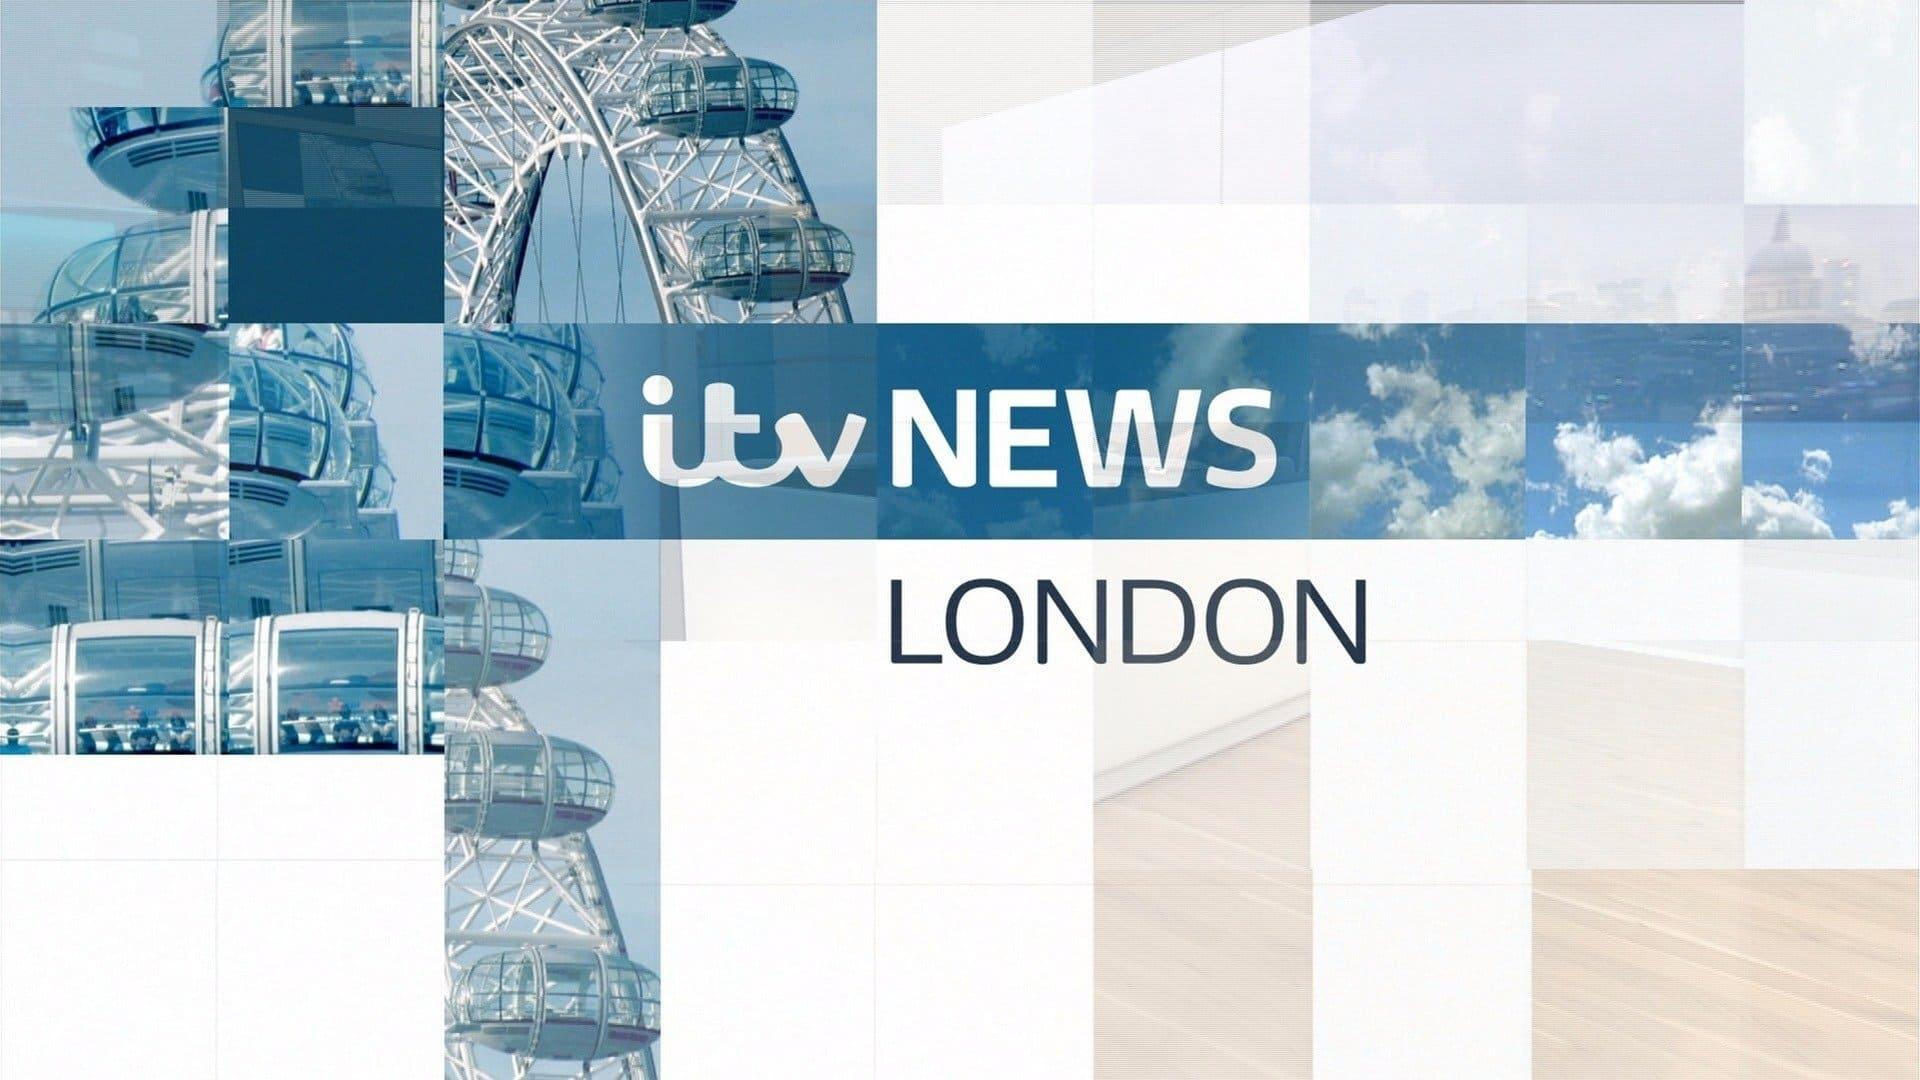 ITV News London backdrop